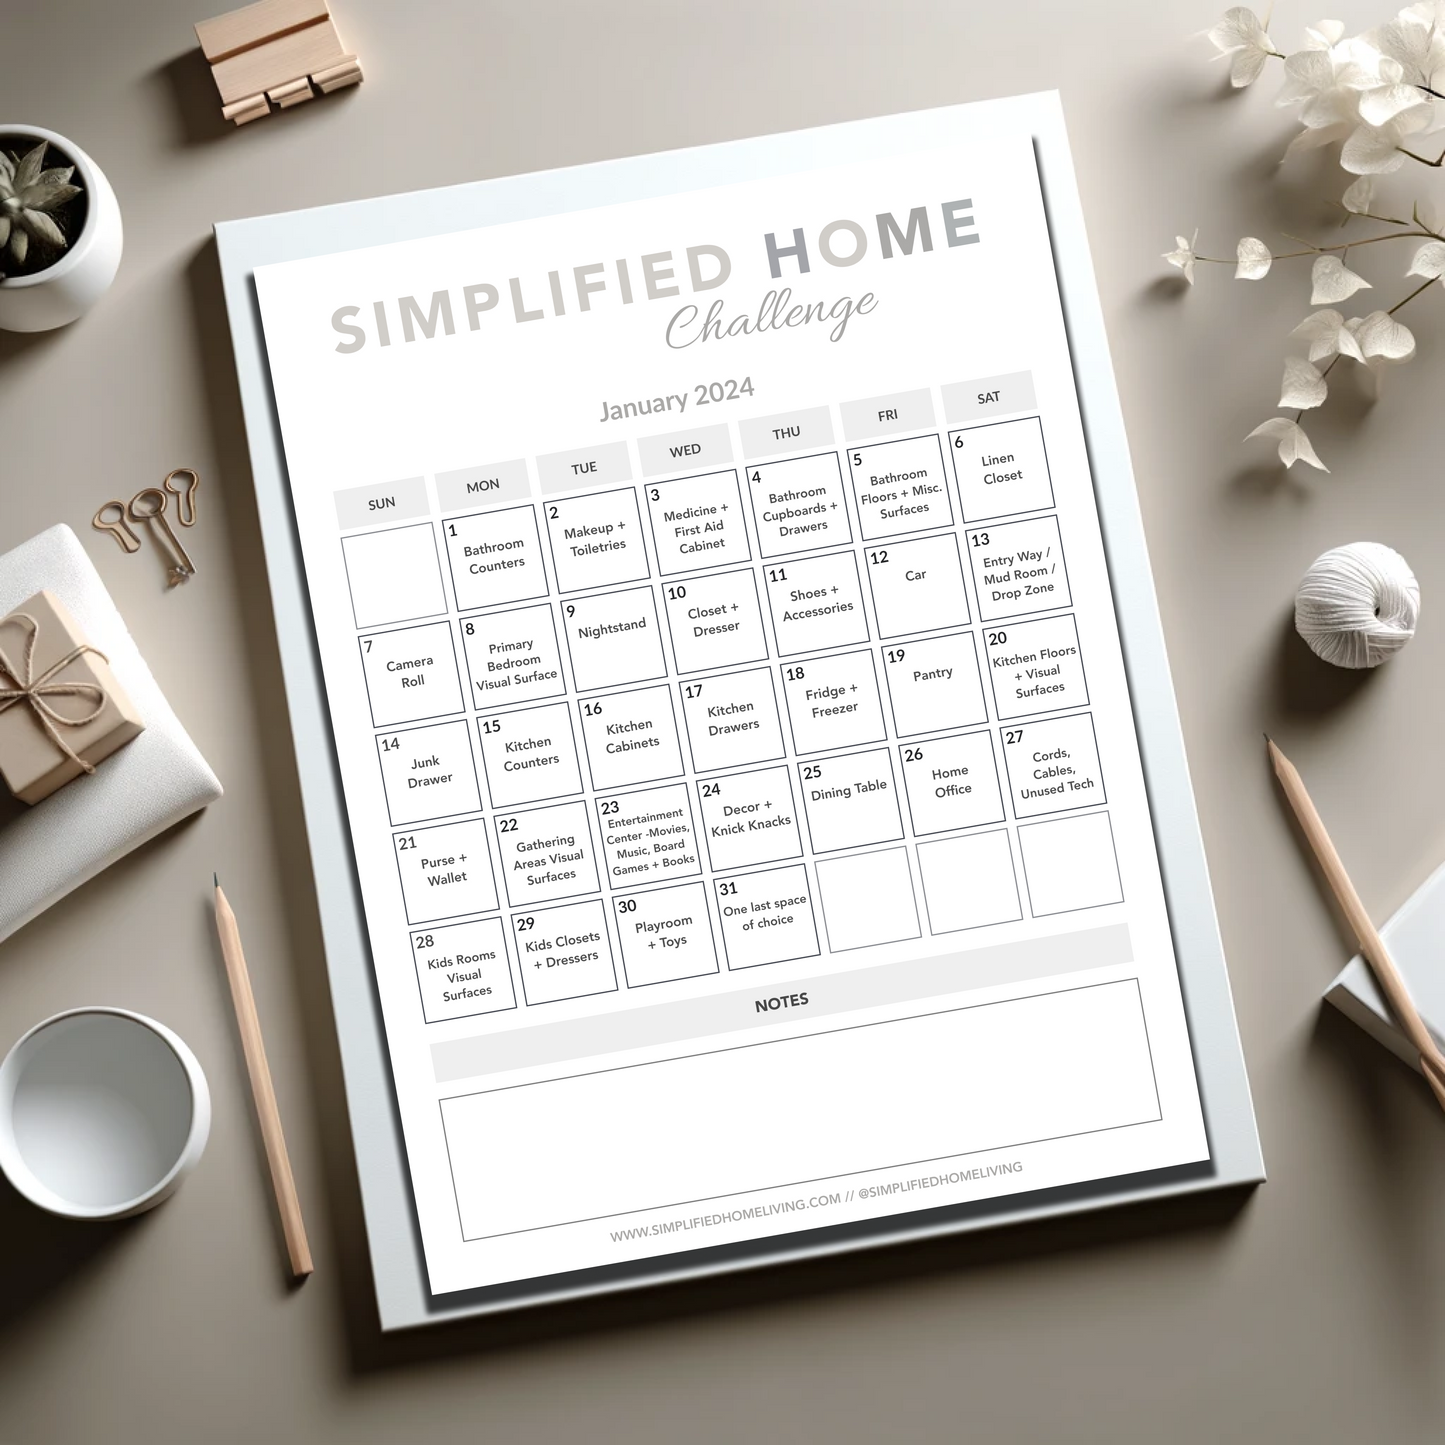 January Simplified Home Challenge, 2024 Calendar